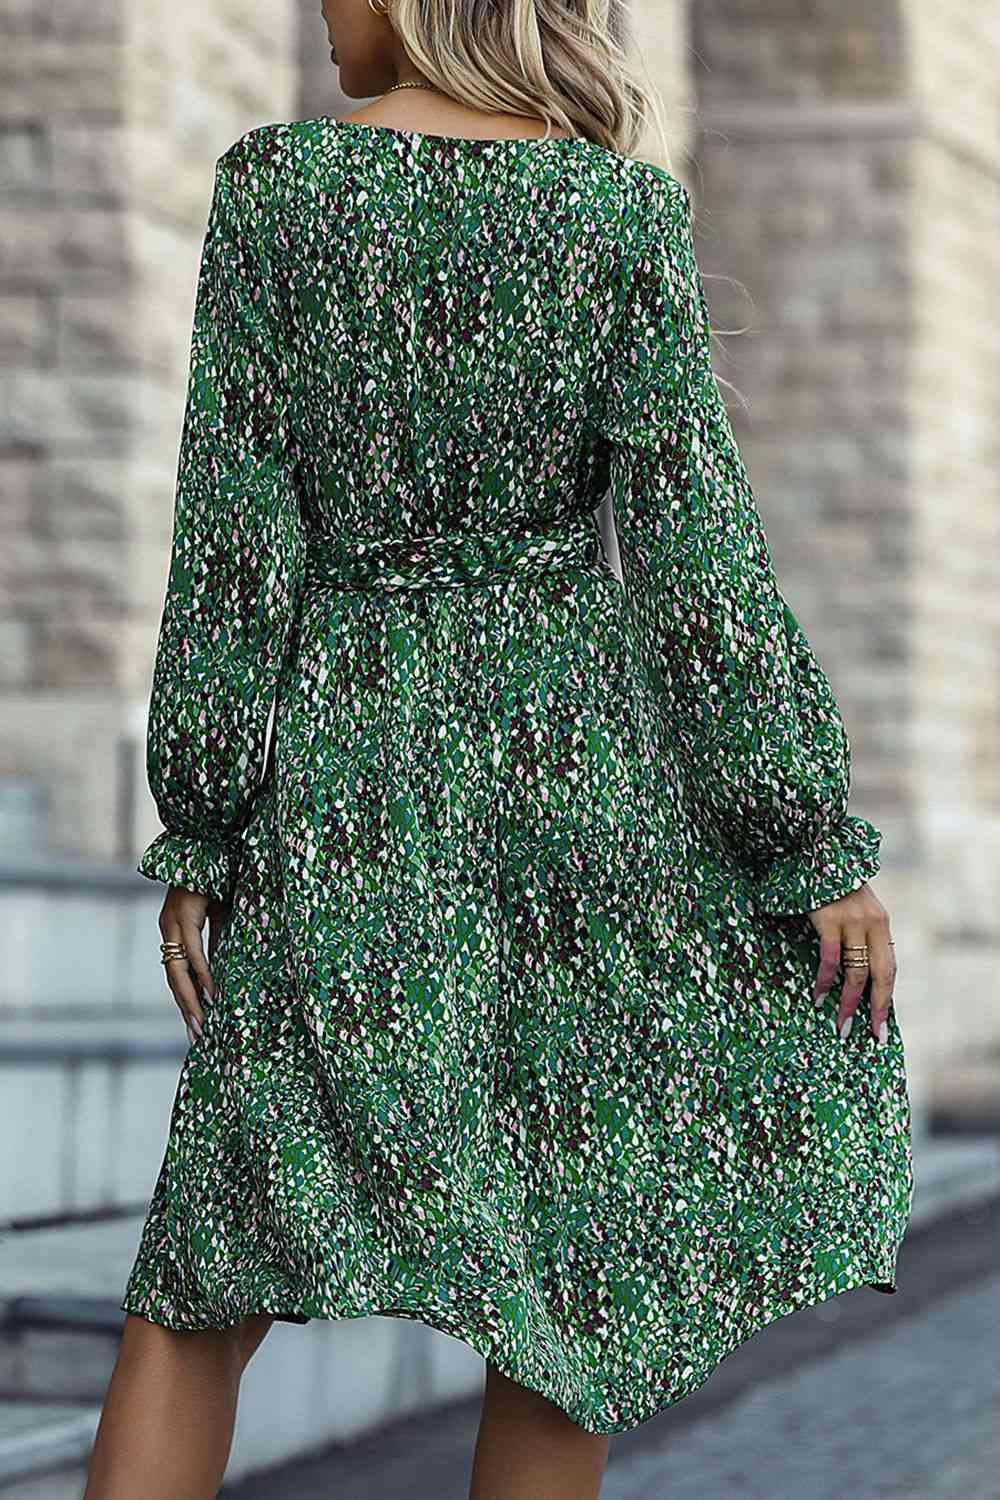 a woman wearing a green floral print dress